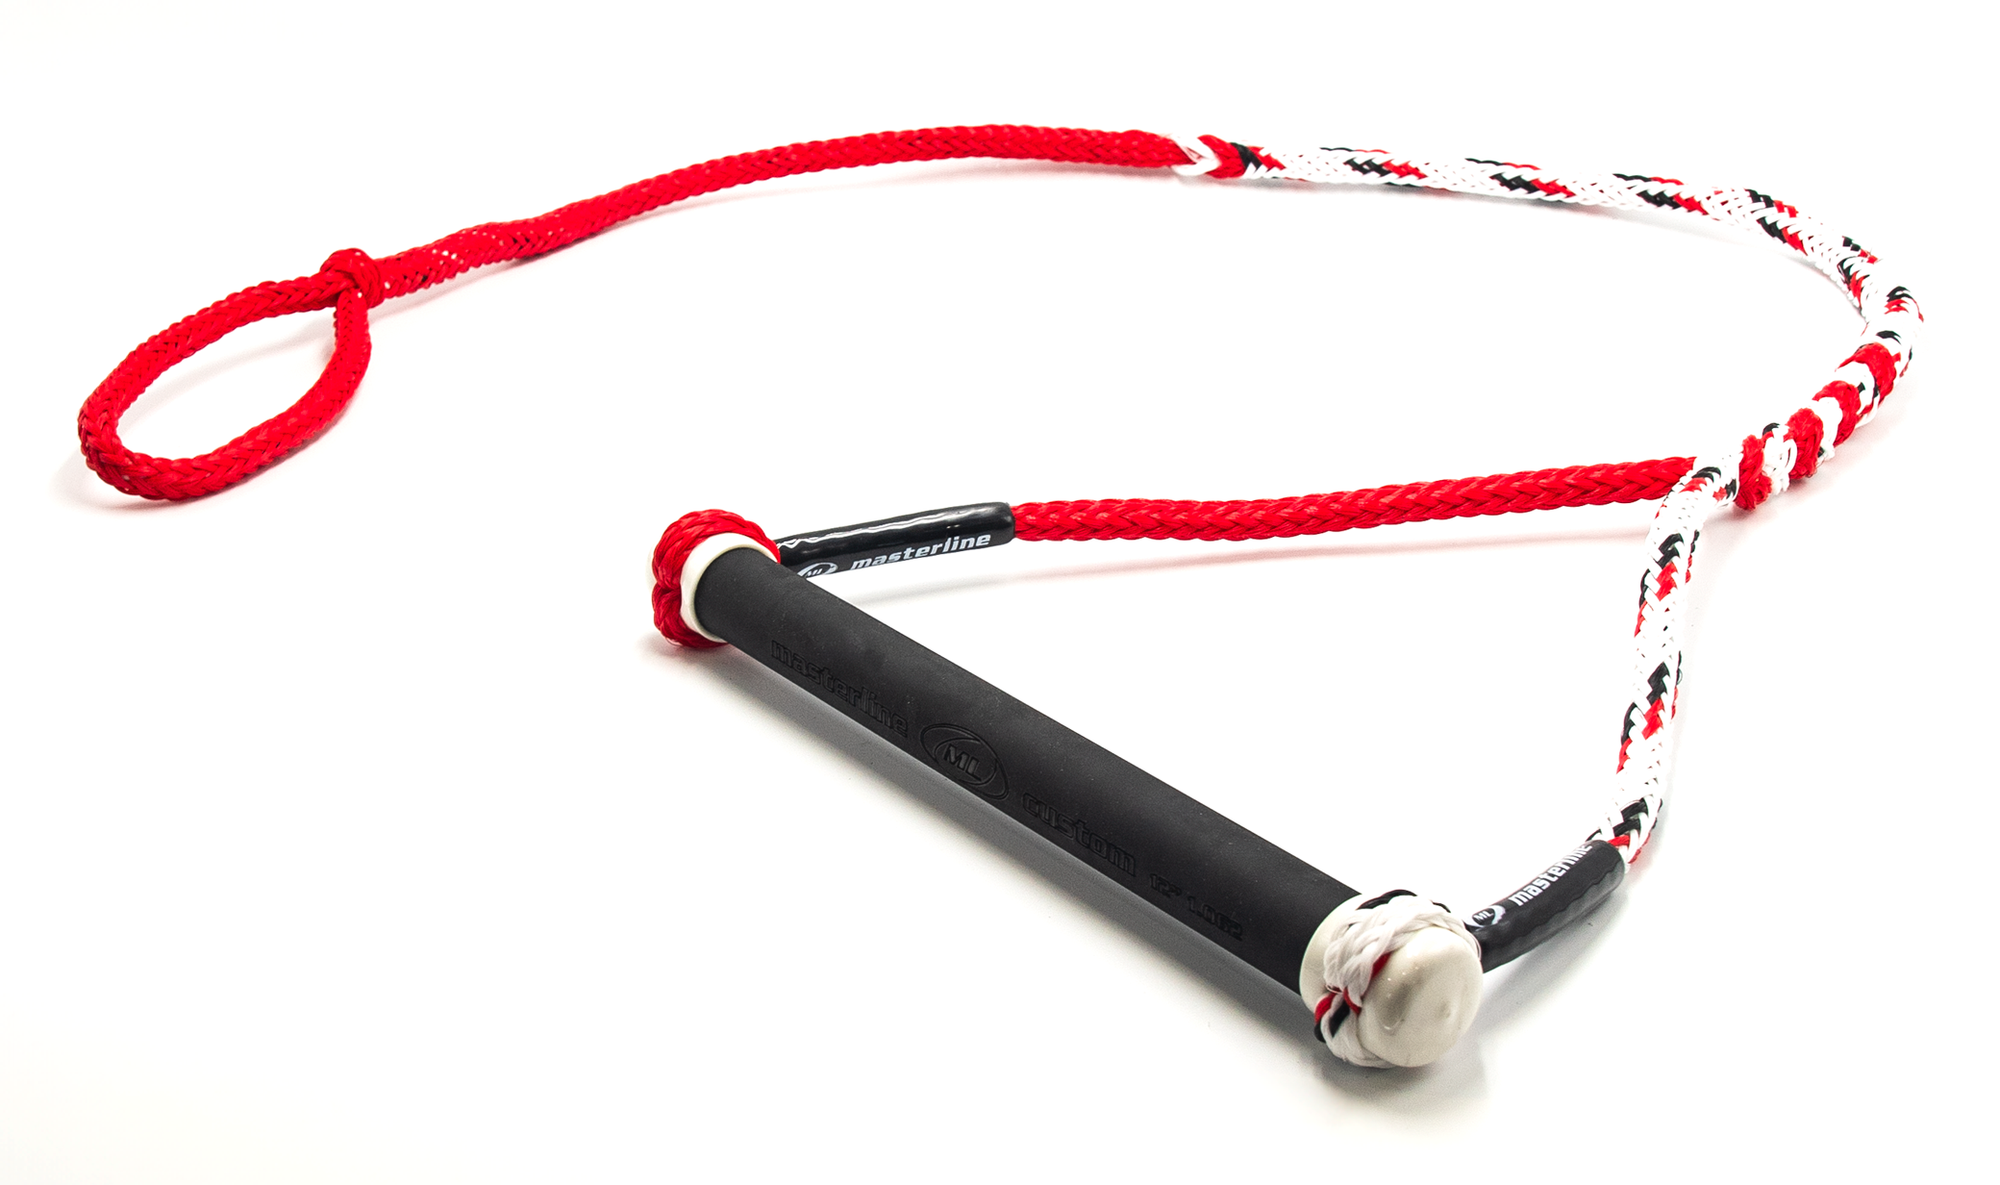 Masterline Custom Water Ski Handle - Red/Black/White